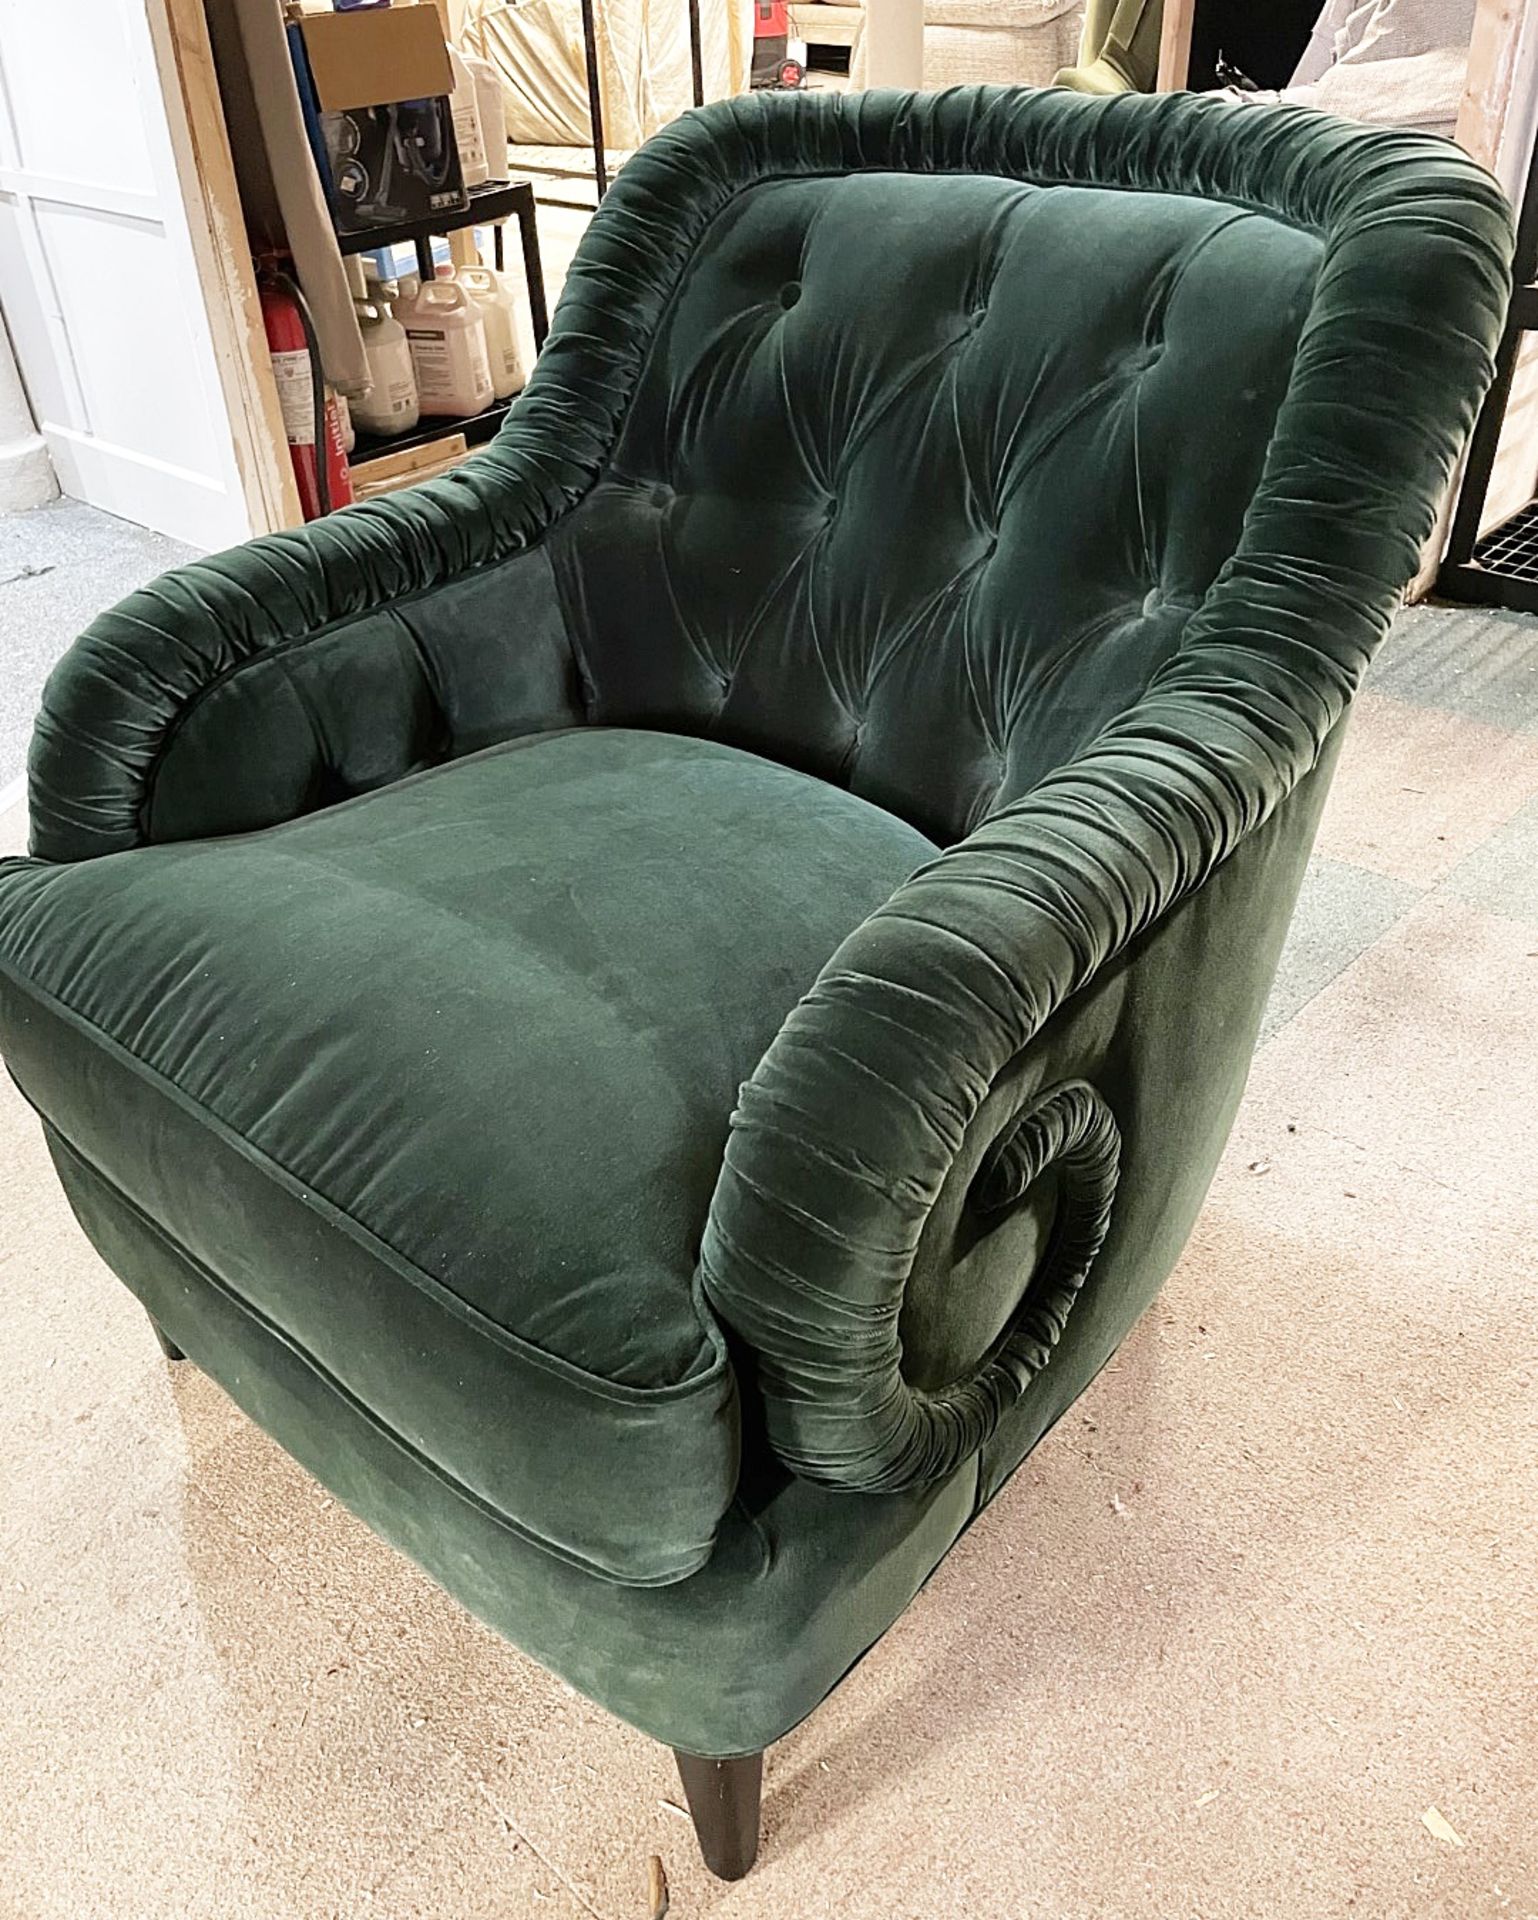 1 x Sumptuous Luxury Deep Green Velvet Upholstered Armchair - Original RRP £1,495 - Image 4 of 7